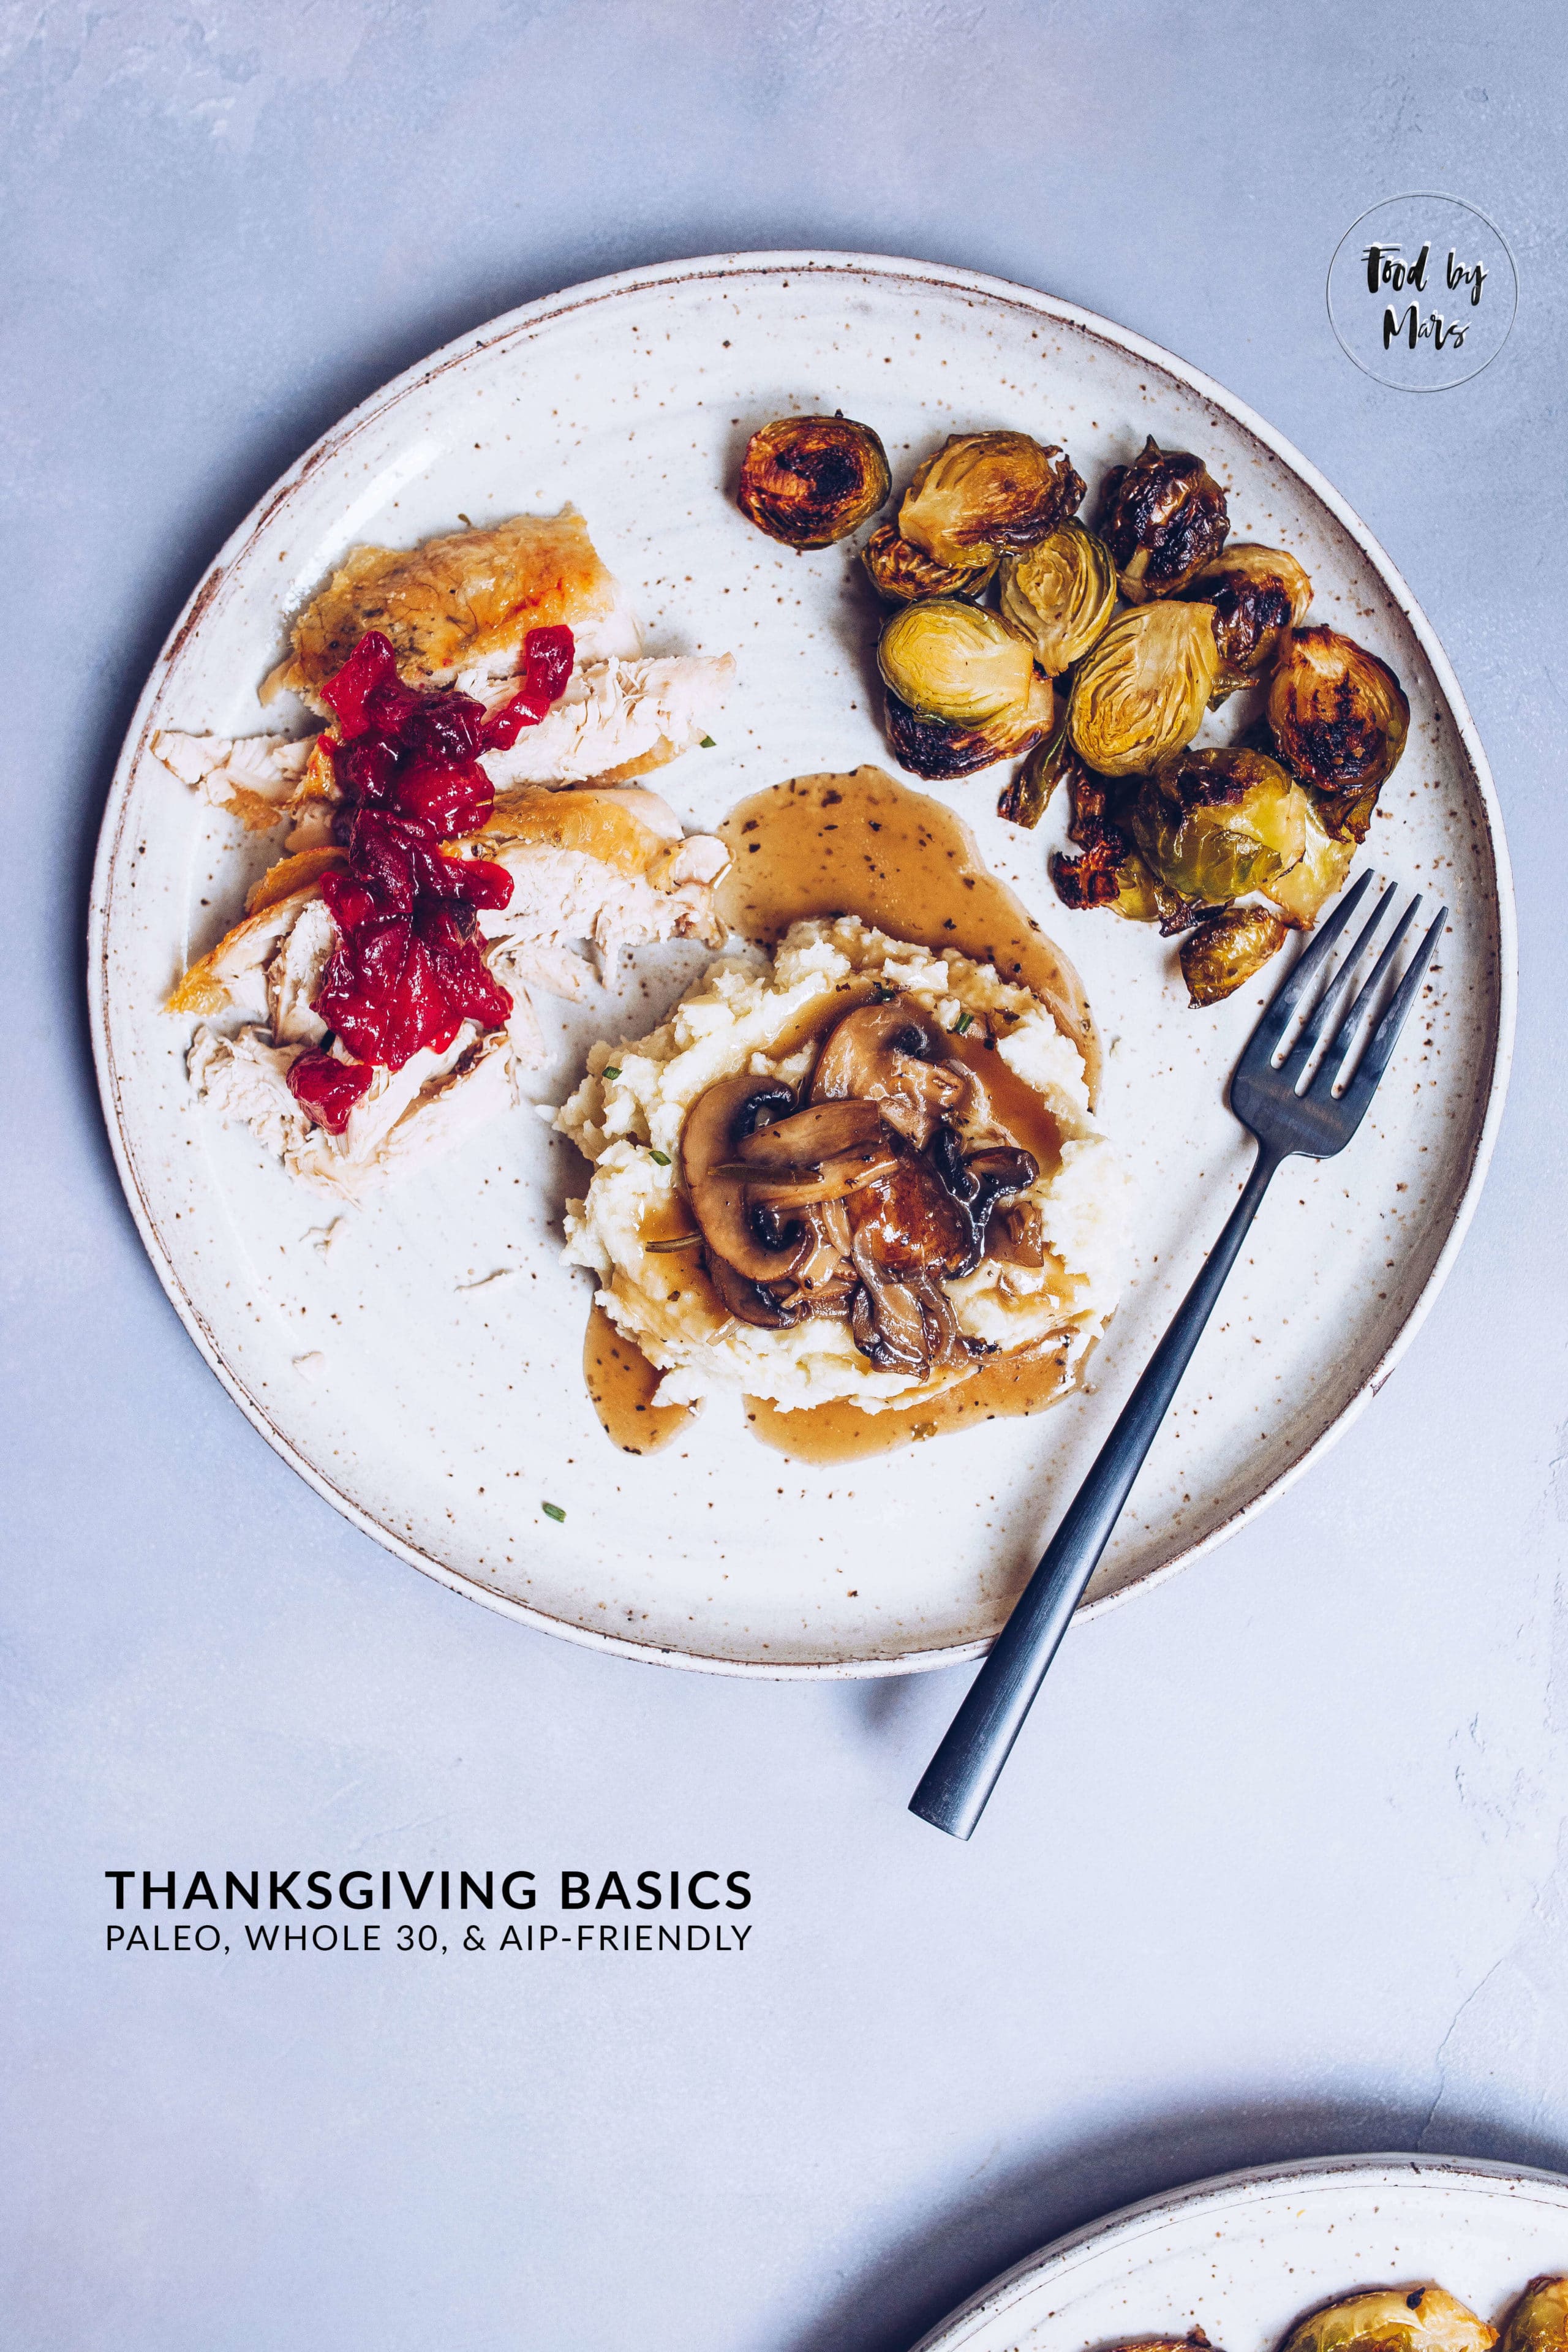 Paleo Thanksgiving Basics via Food by Mars (Whole 30, AIP-friendly)